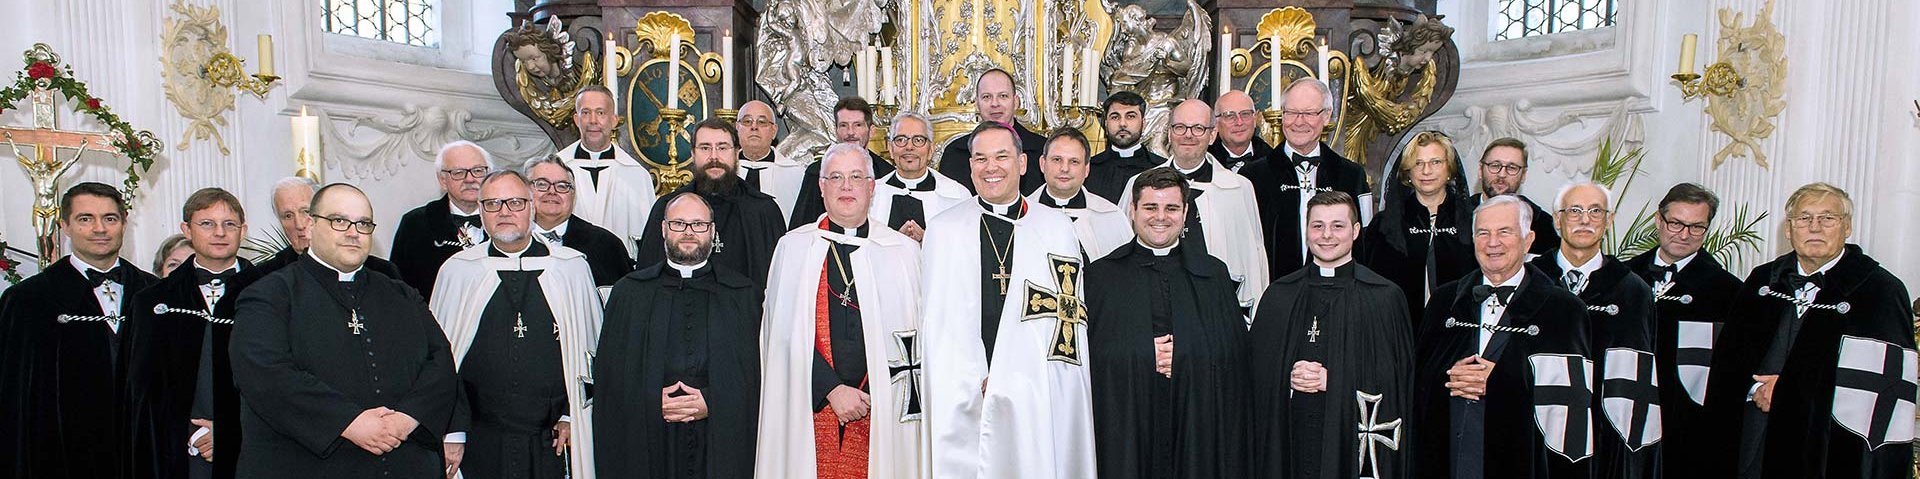 Gruppenfoto: Priester in Kirche